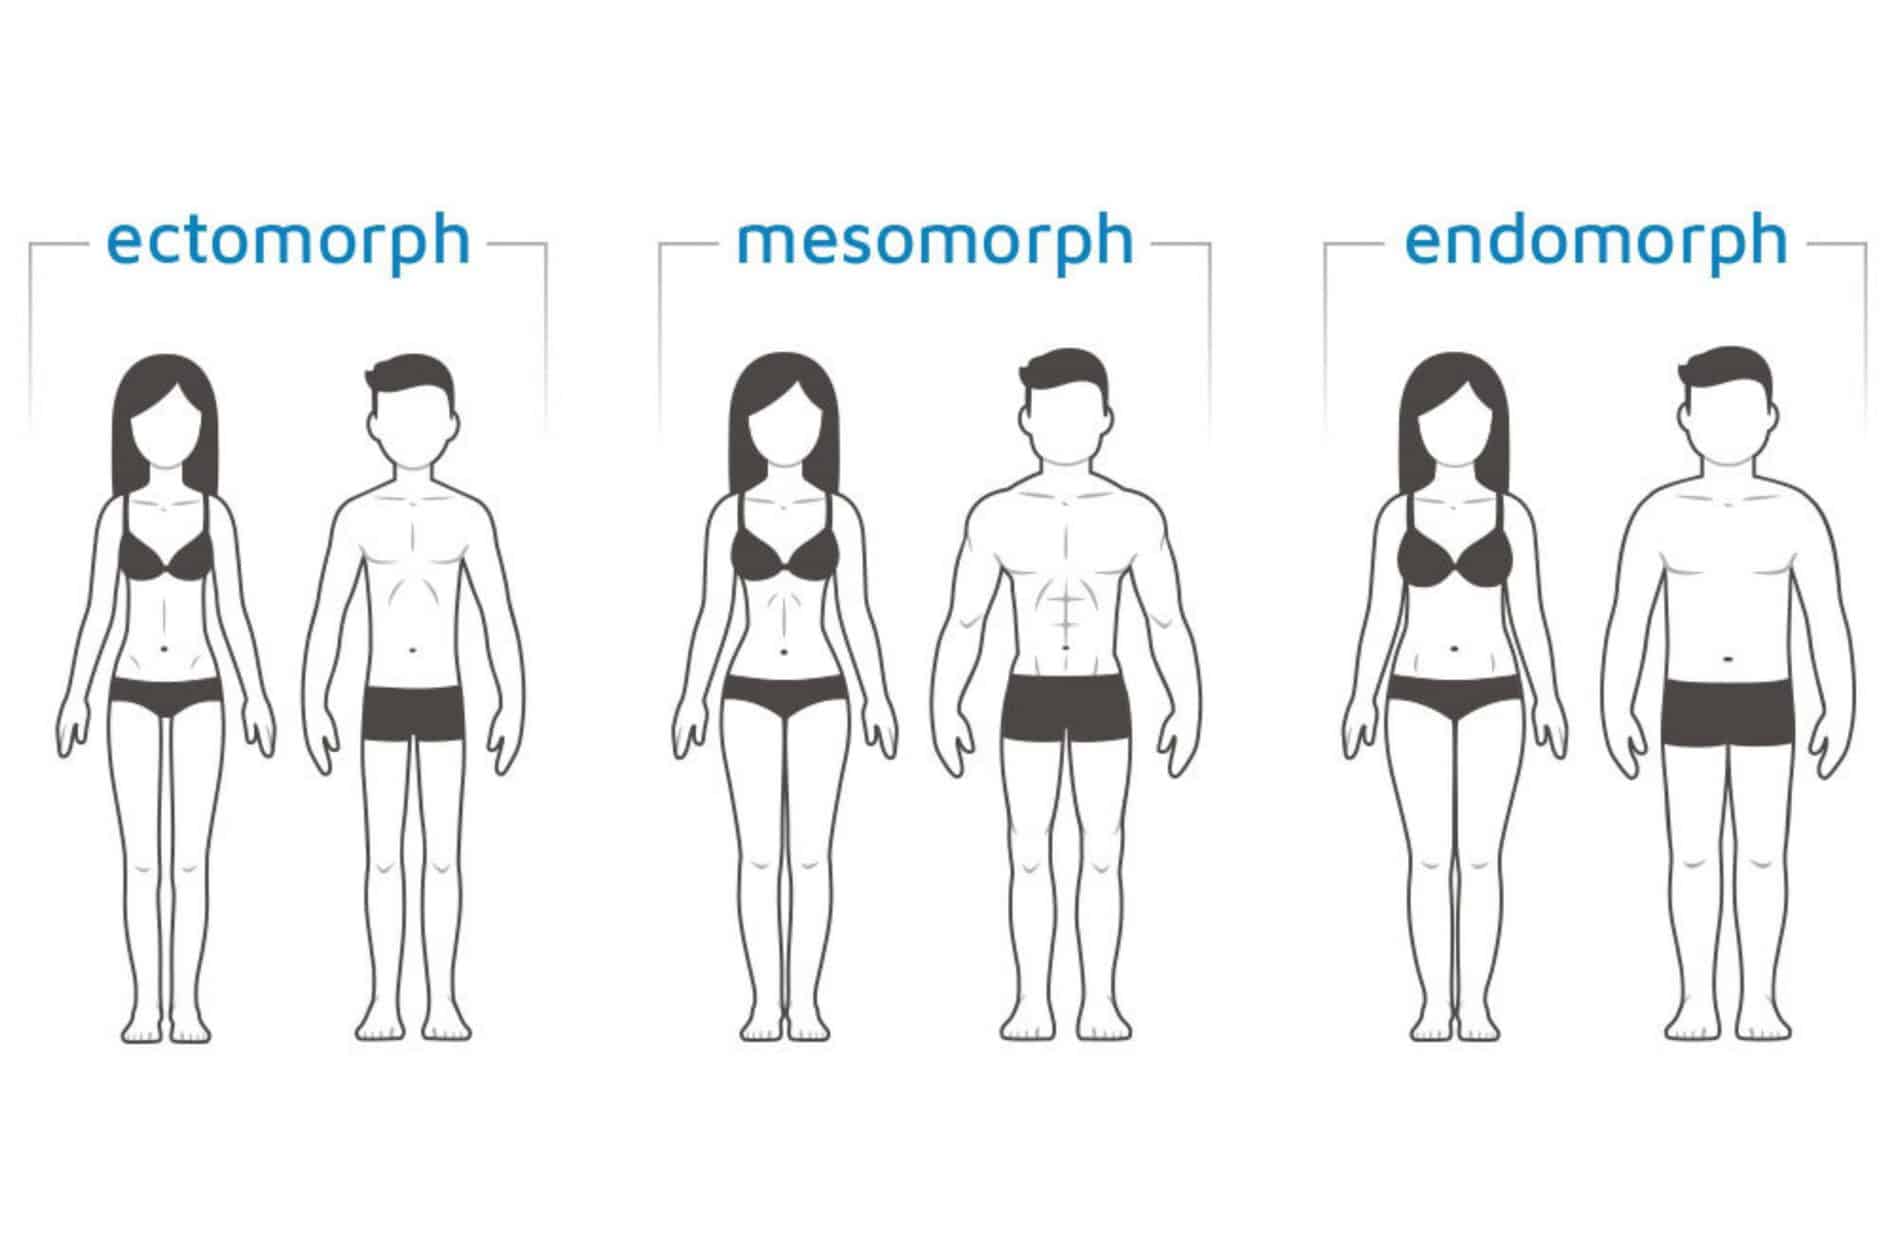 Body Type Dieting: Ectomorphs, Endomorphs, & Mesomorphs